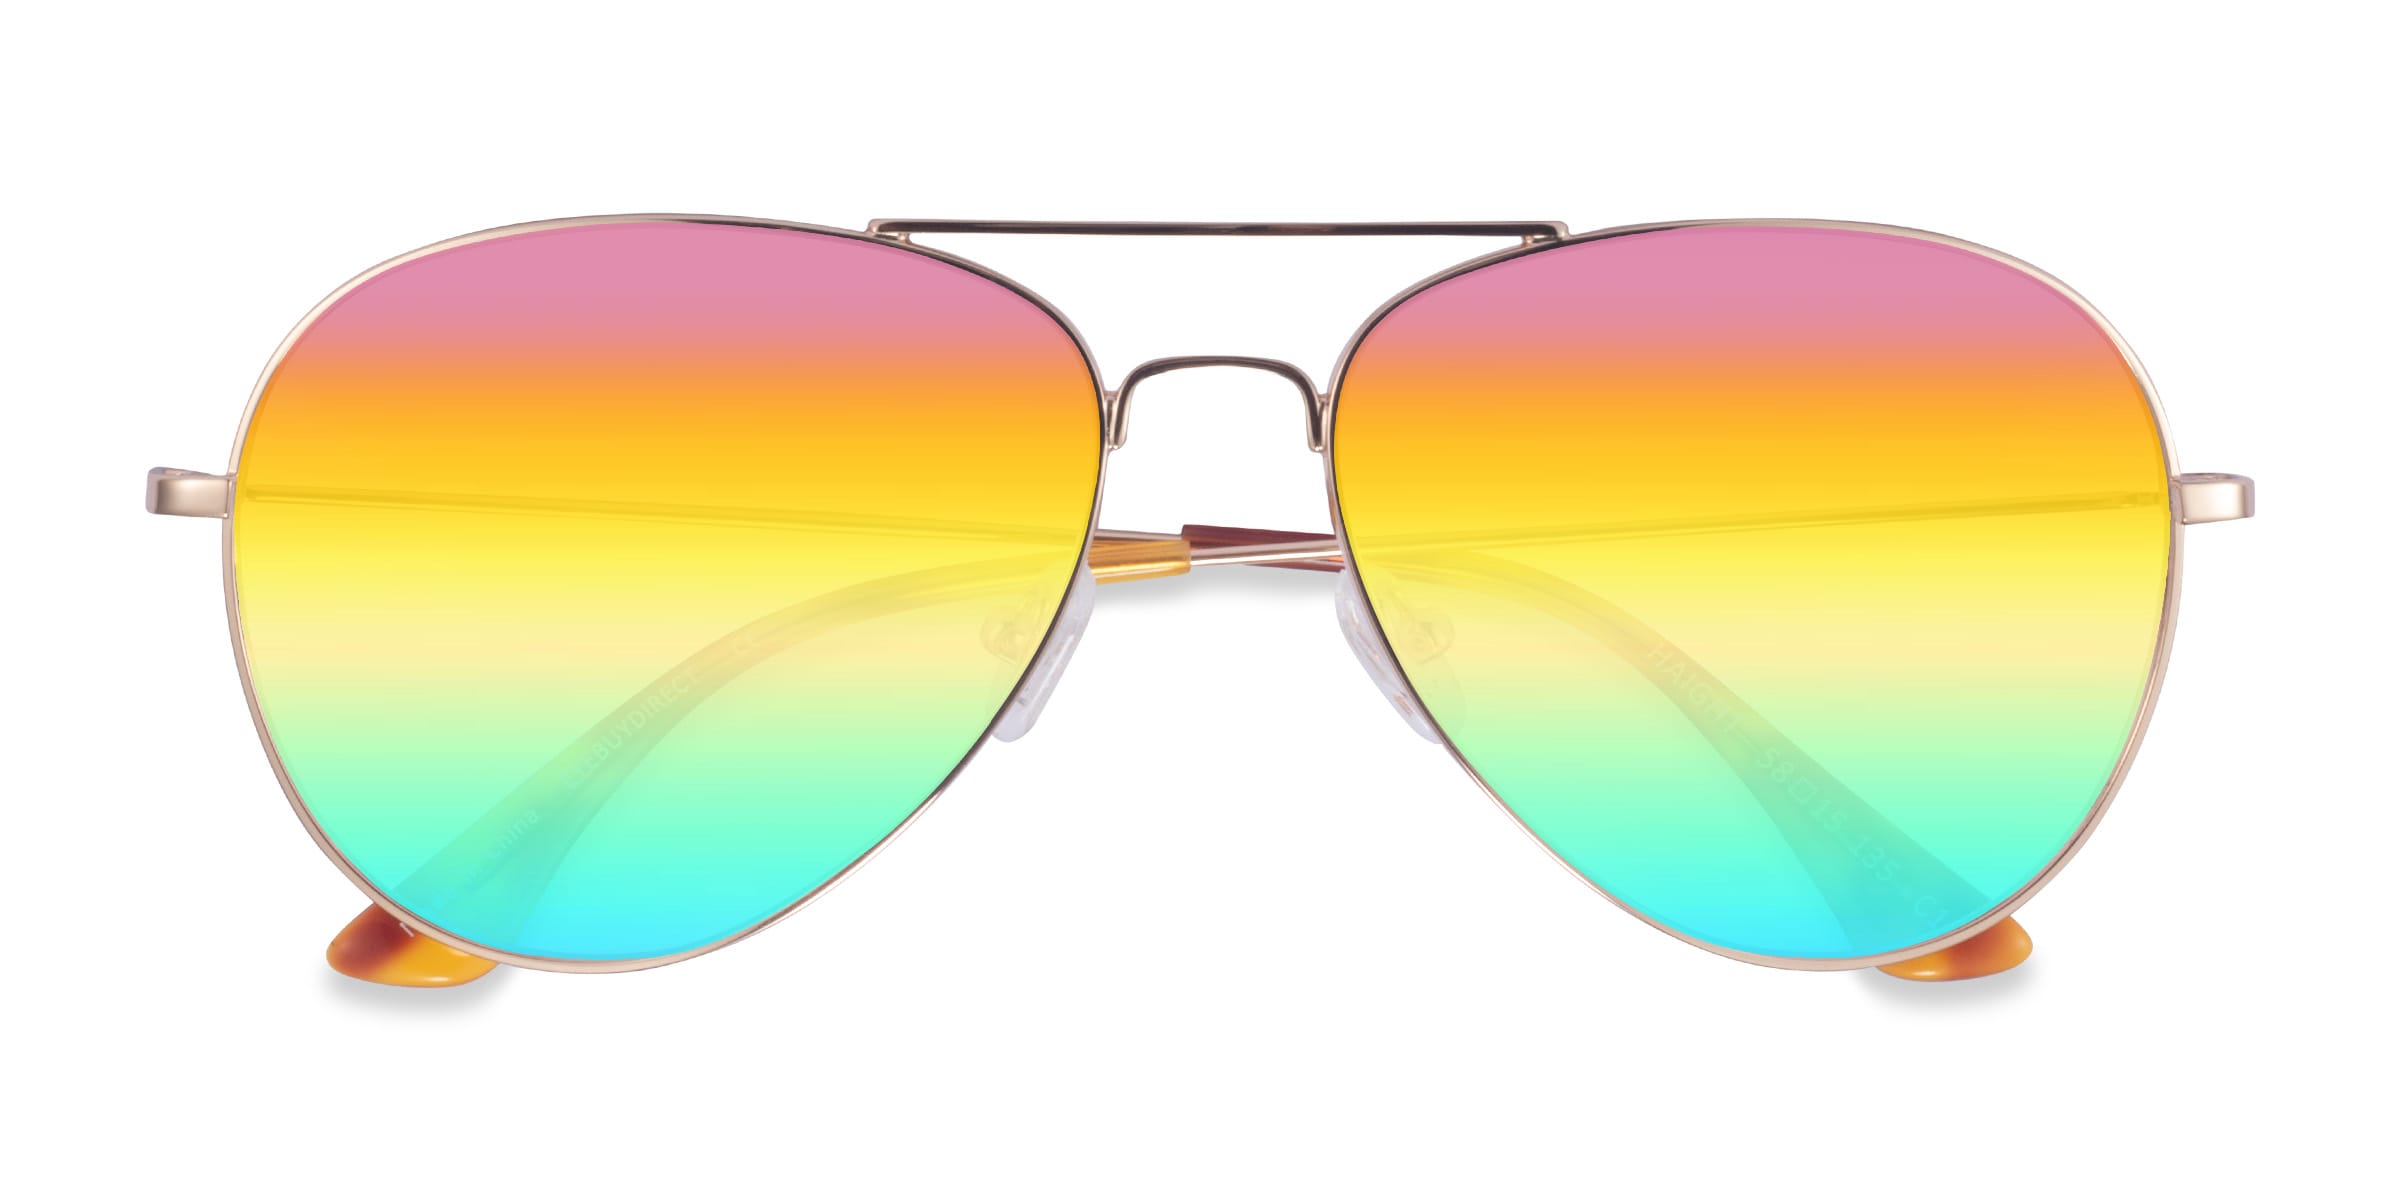 Buy Sunglasses for Women Online at Best Price | Fastrack Eyewear